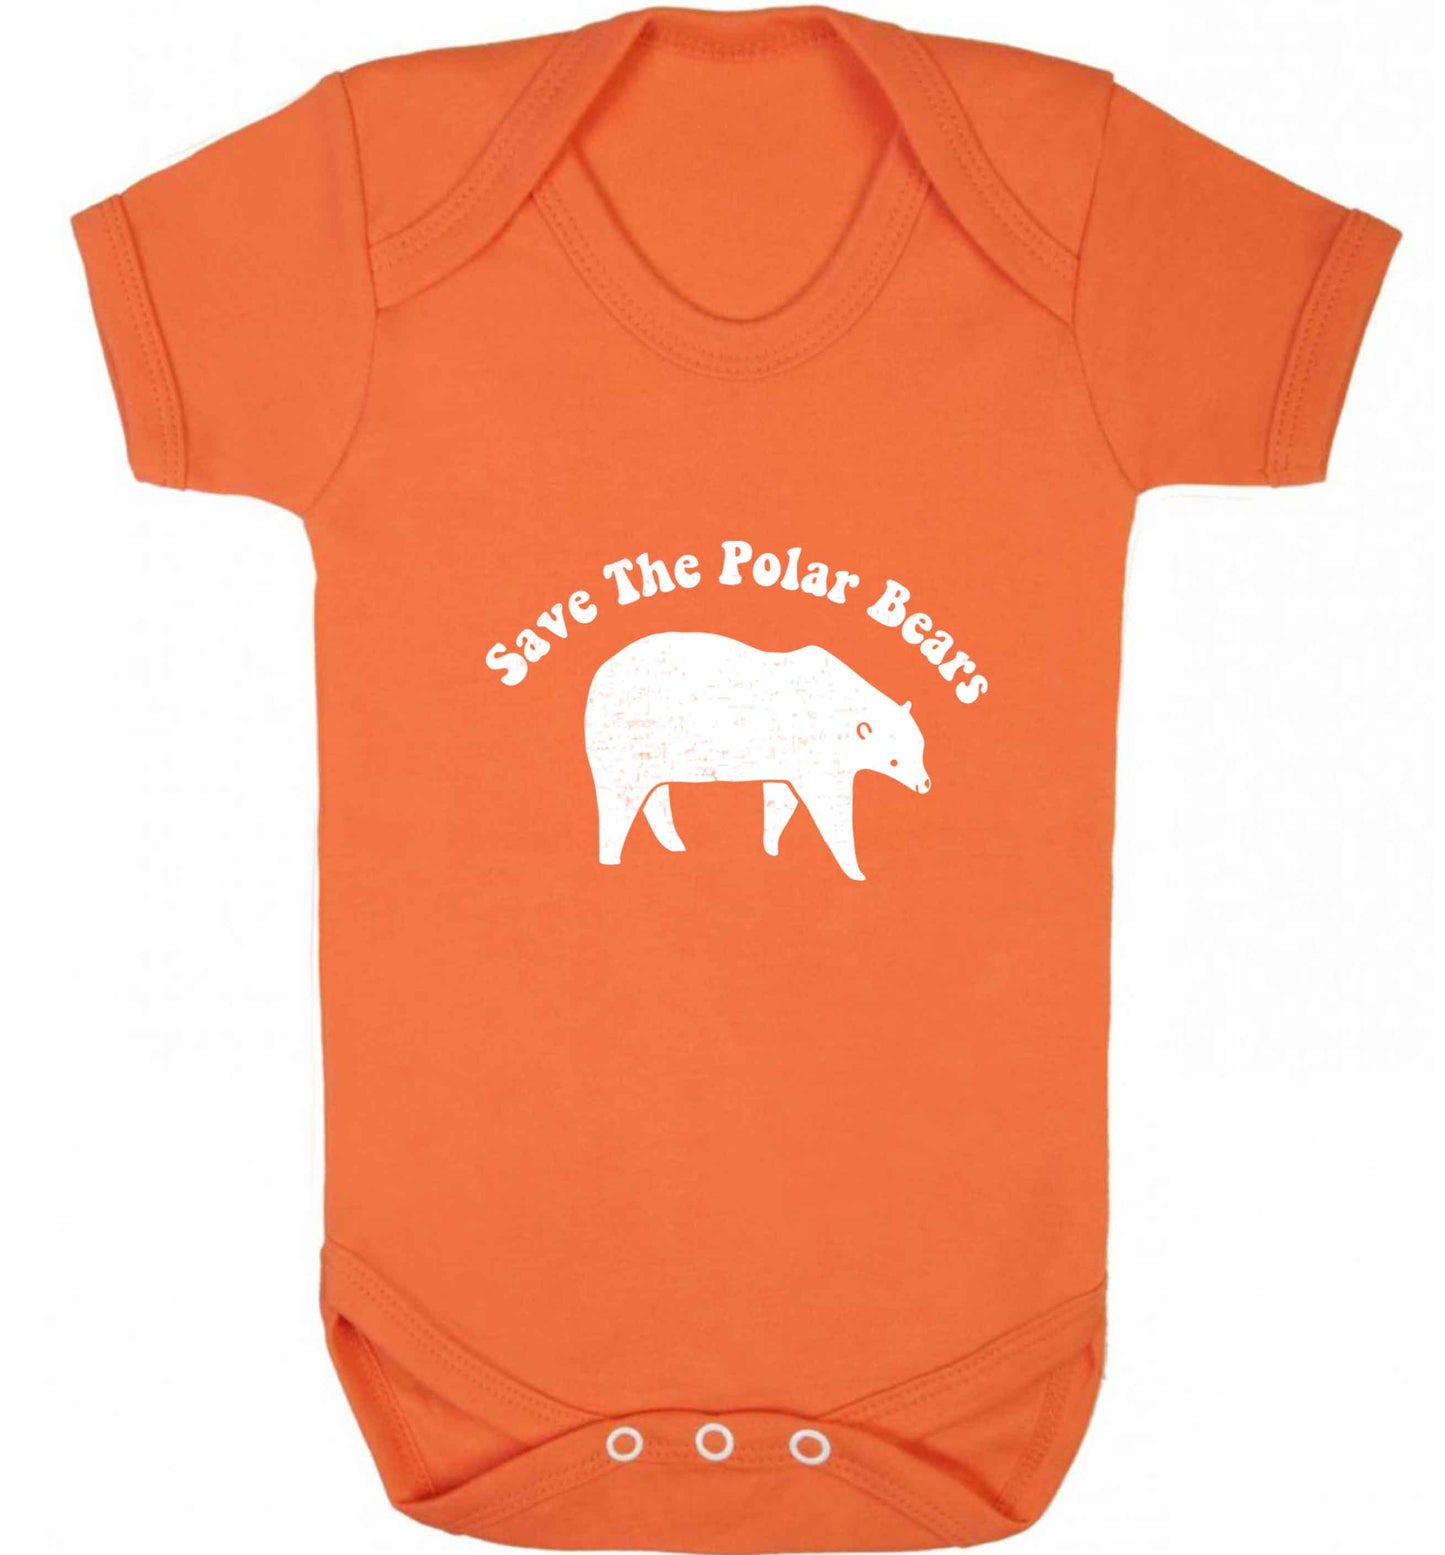 Save The Polar Bears baby vest orange 18-24 months